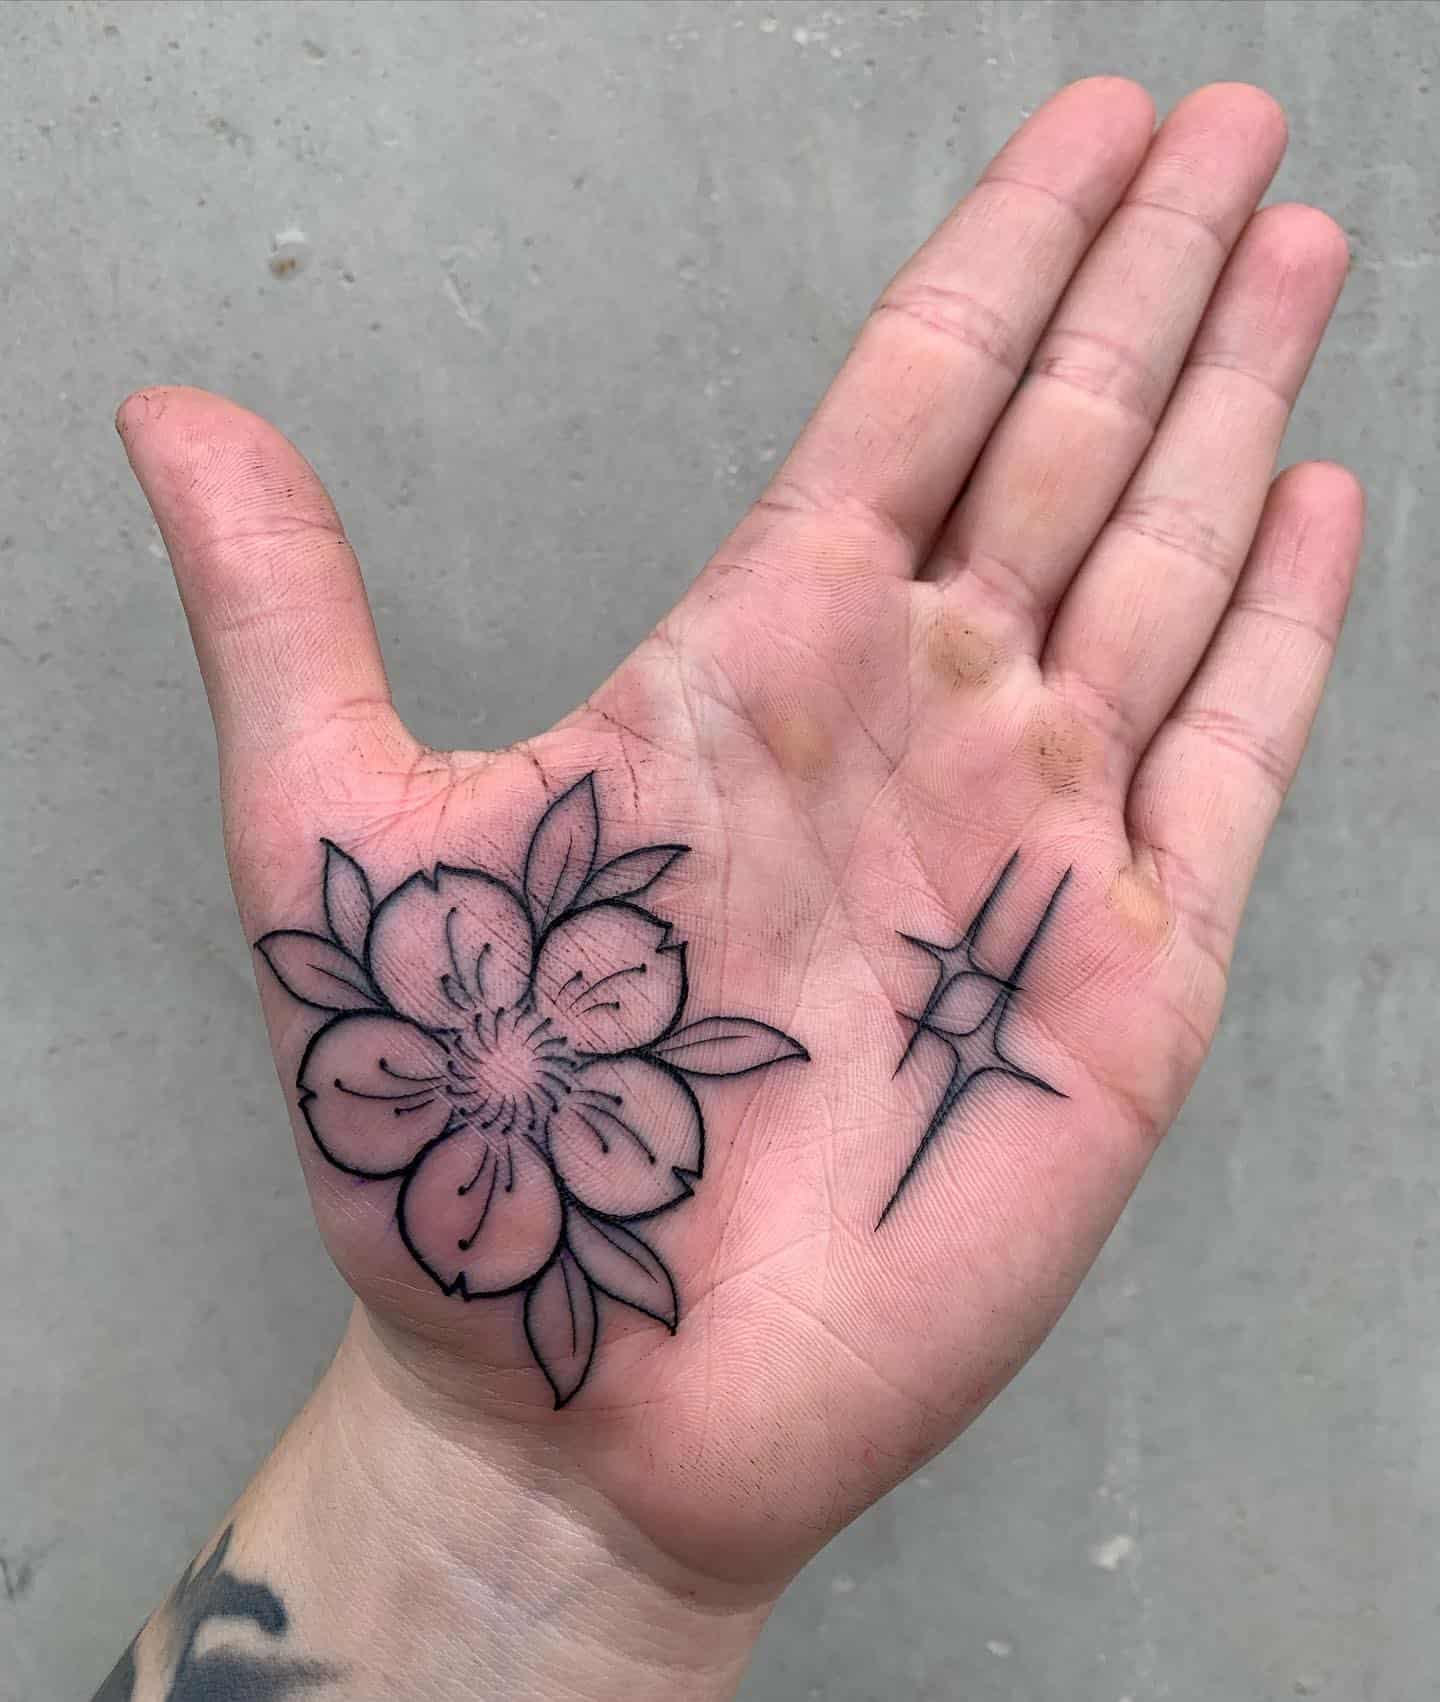 Cherry Blossom Tattoo Ideas 16